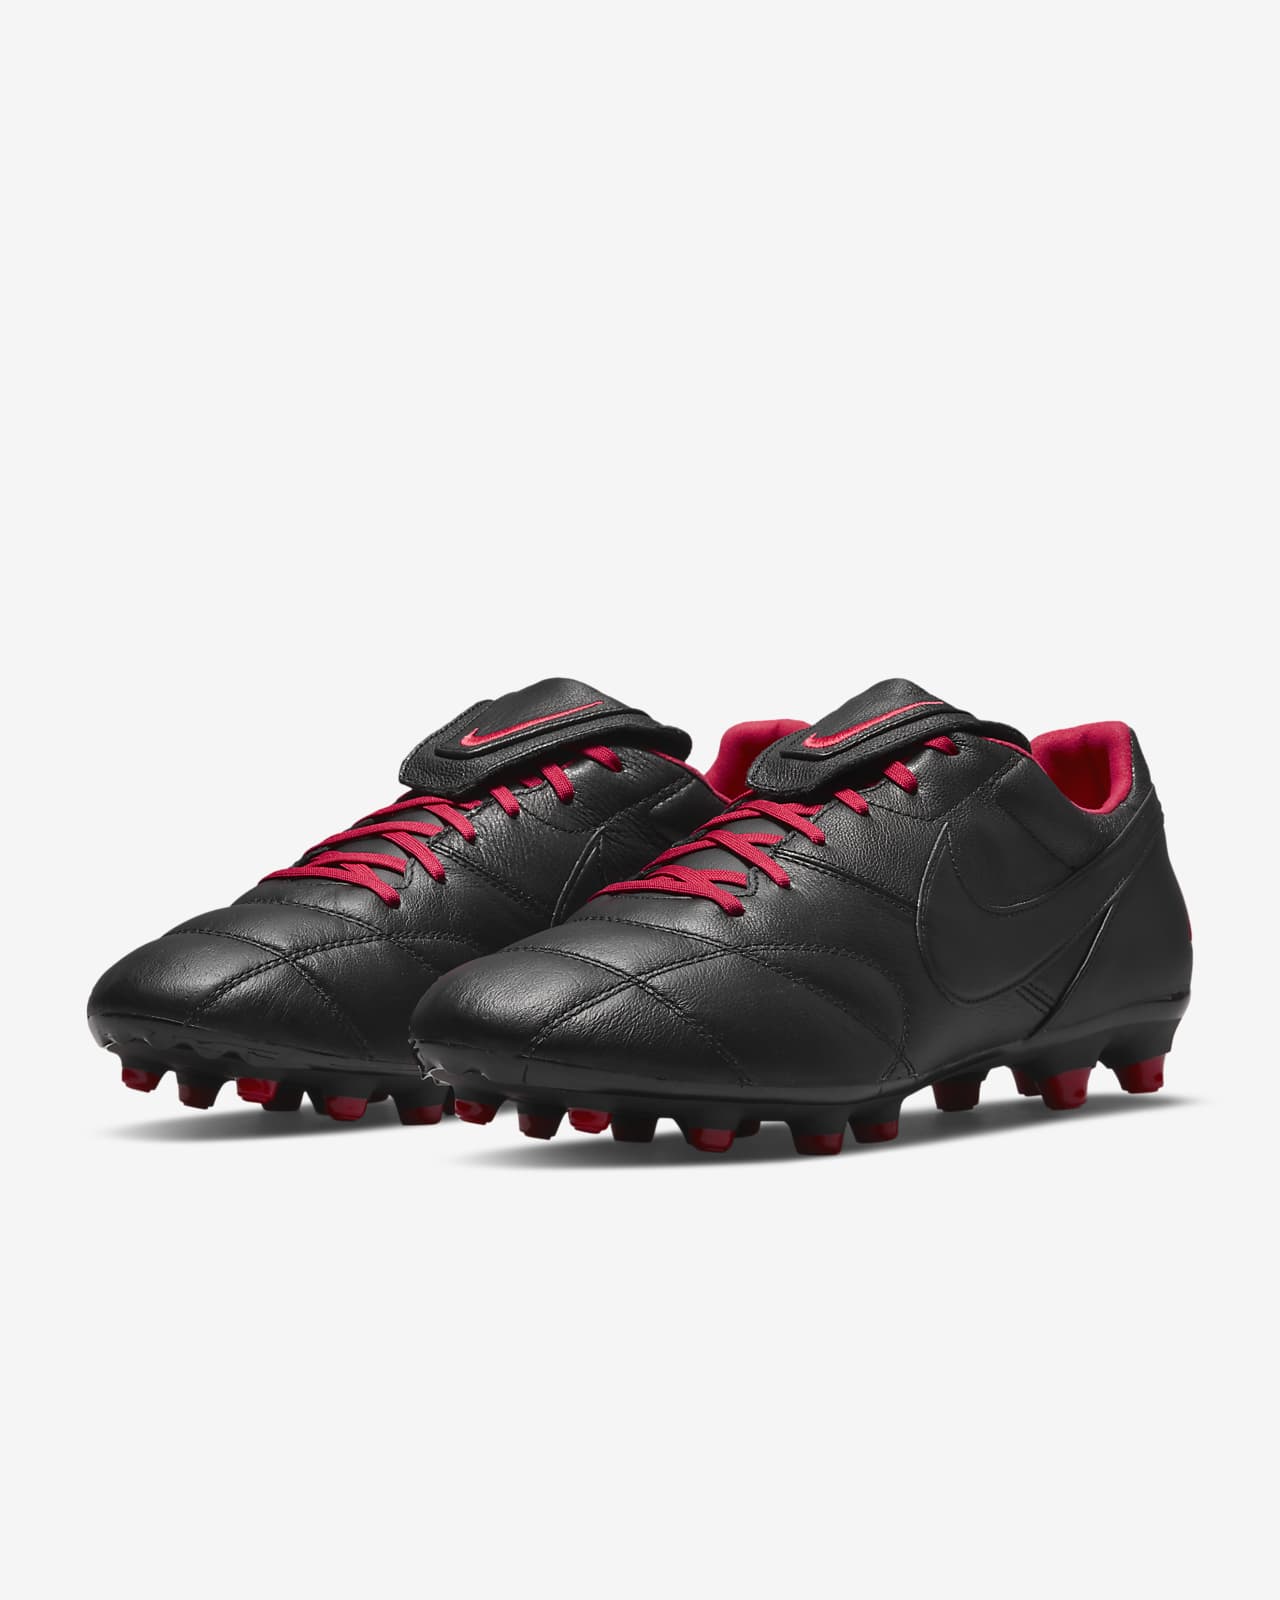 nike kangaroo leather football boots